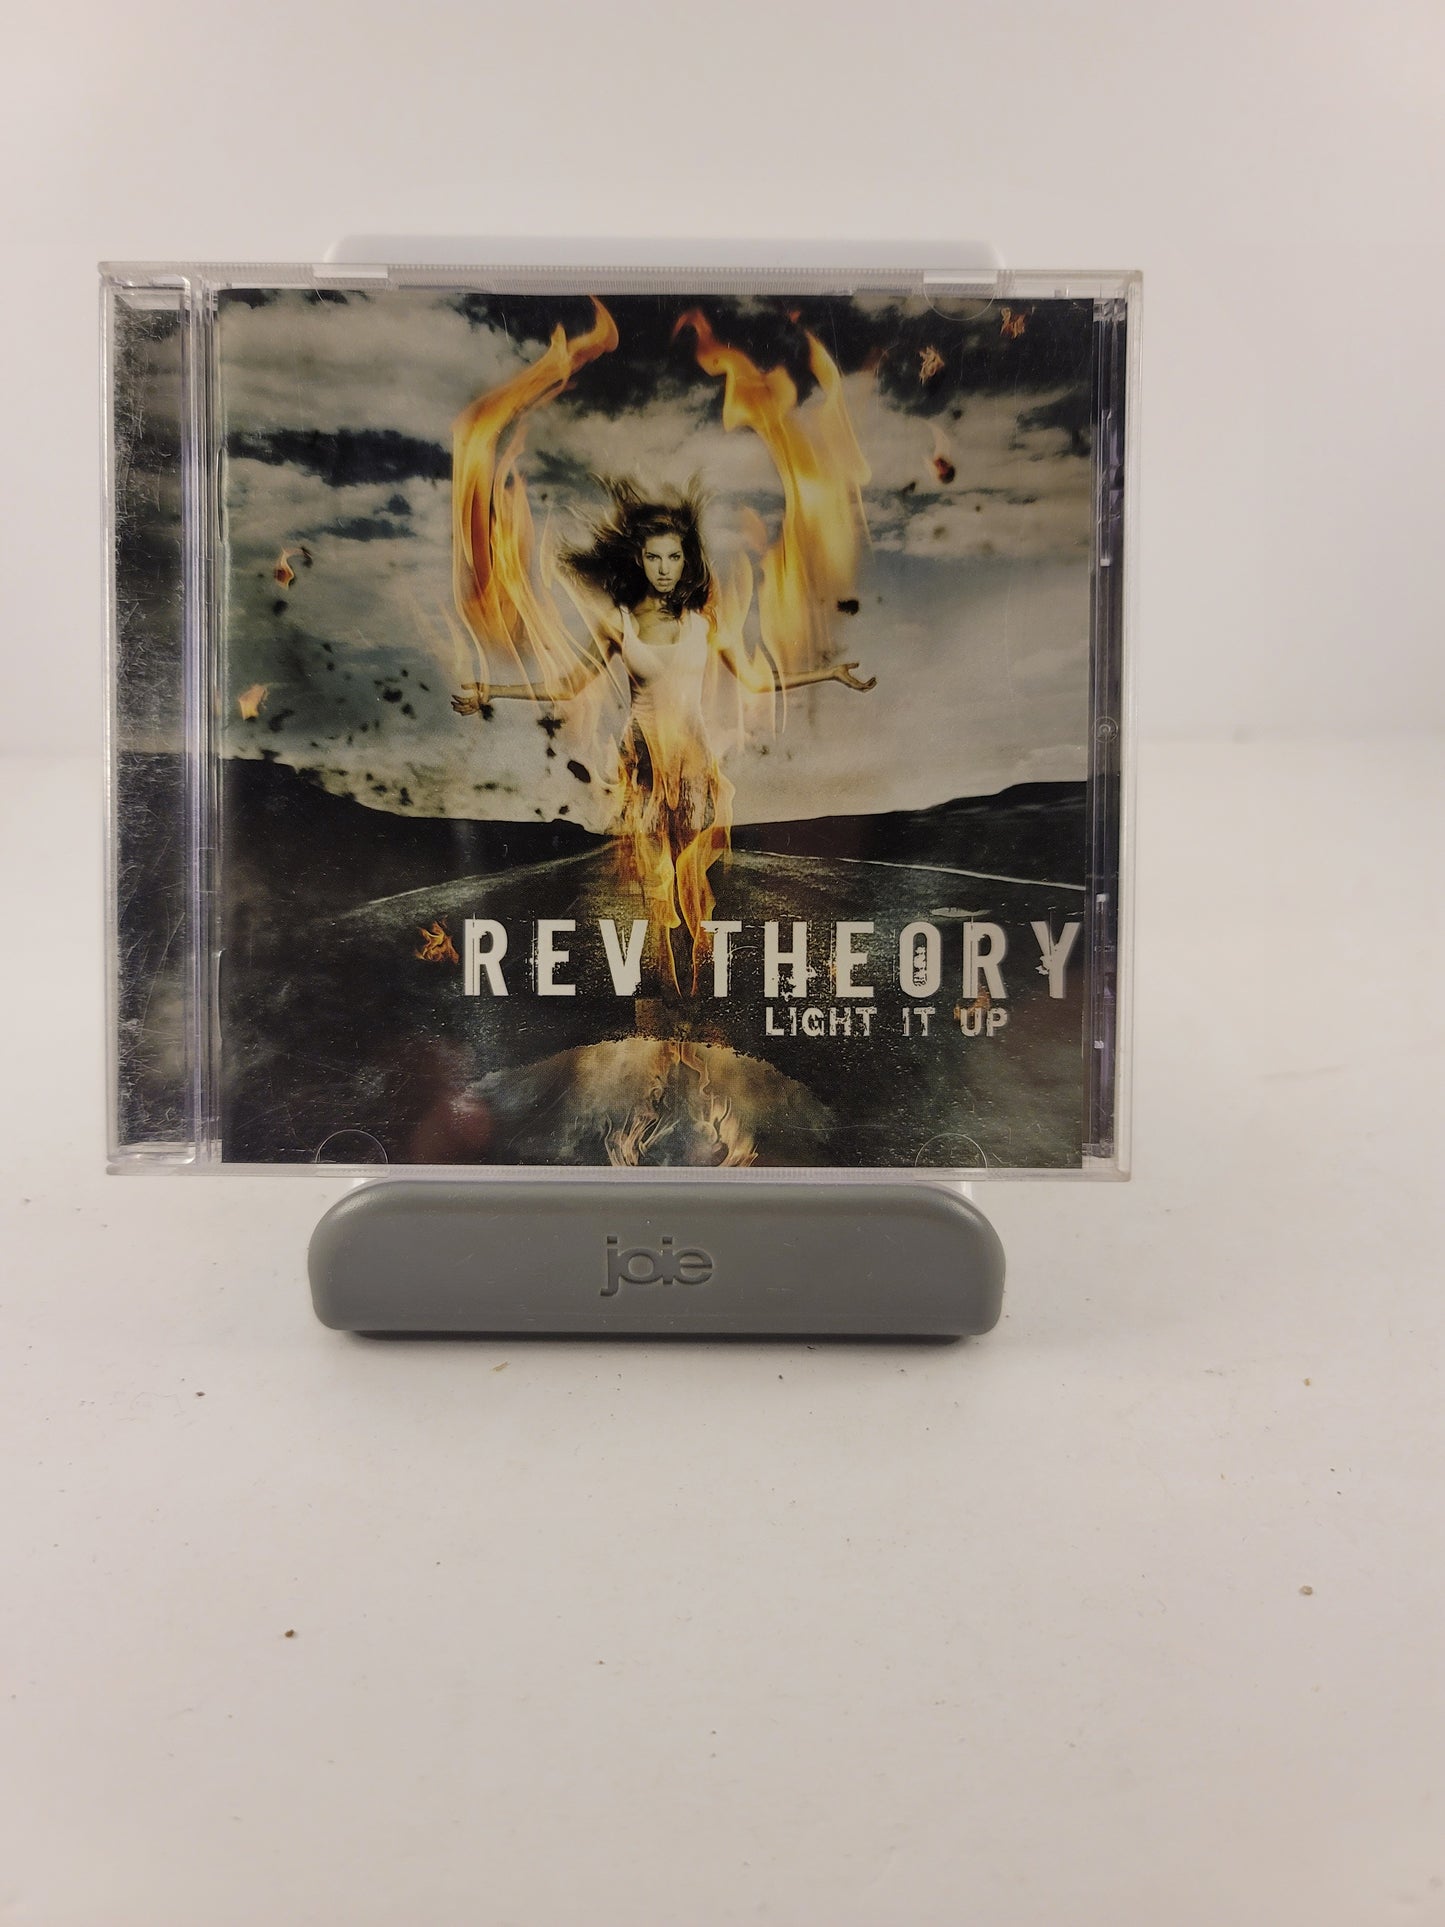 Rev Theory - "Light It Up" CD (2008)